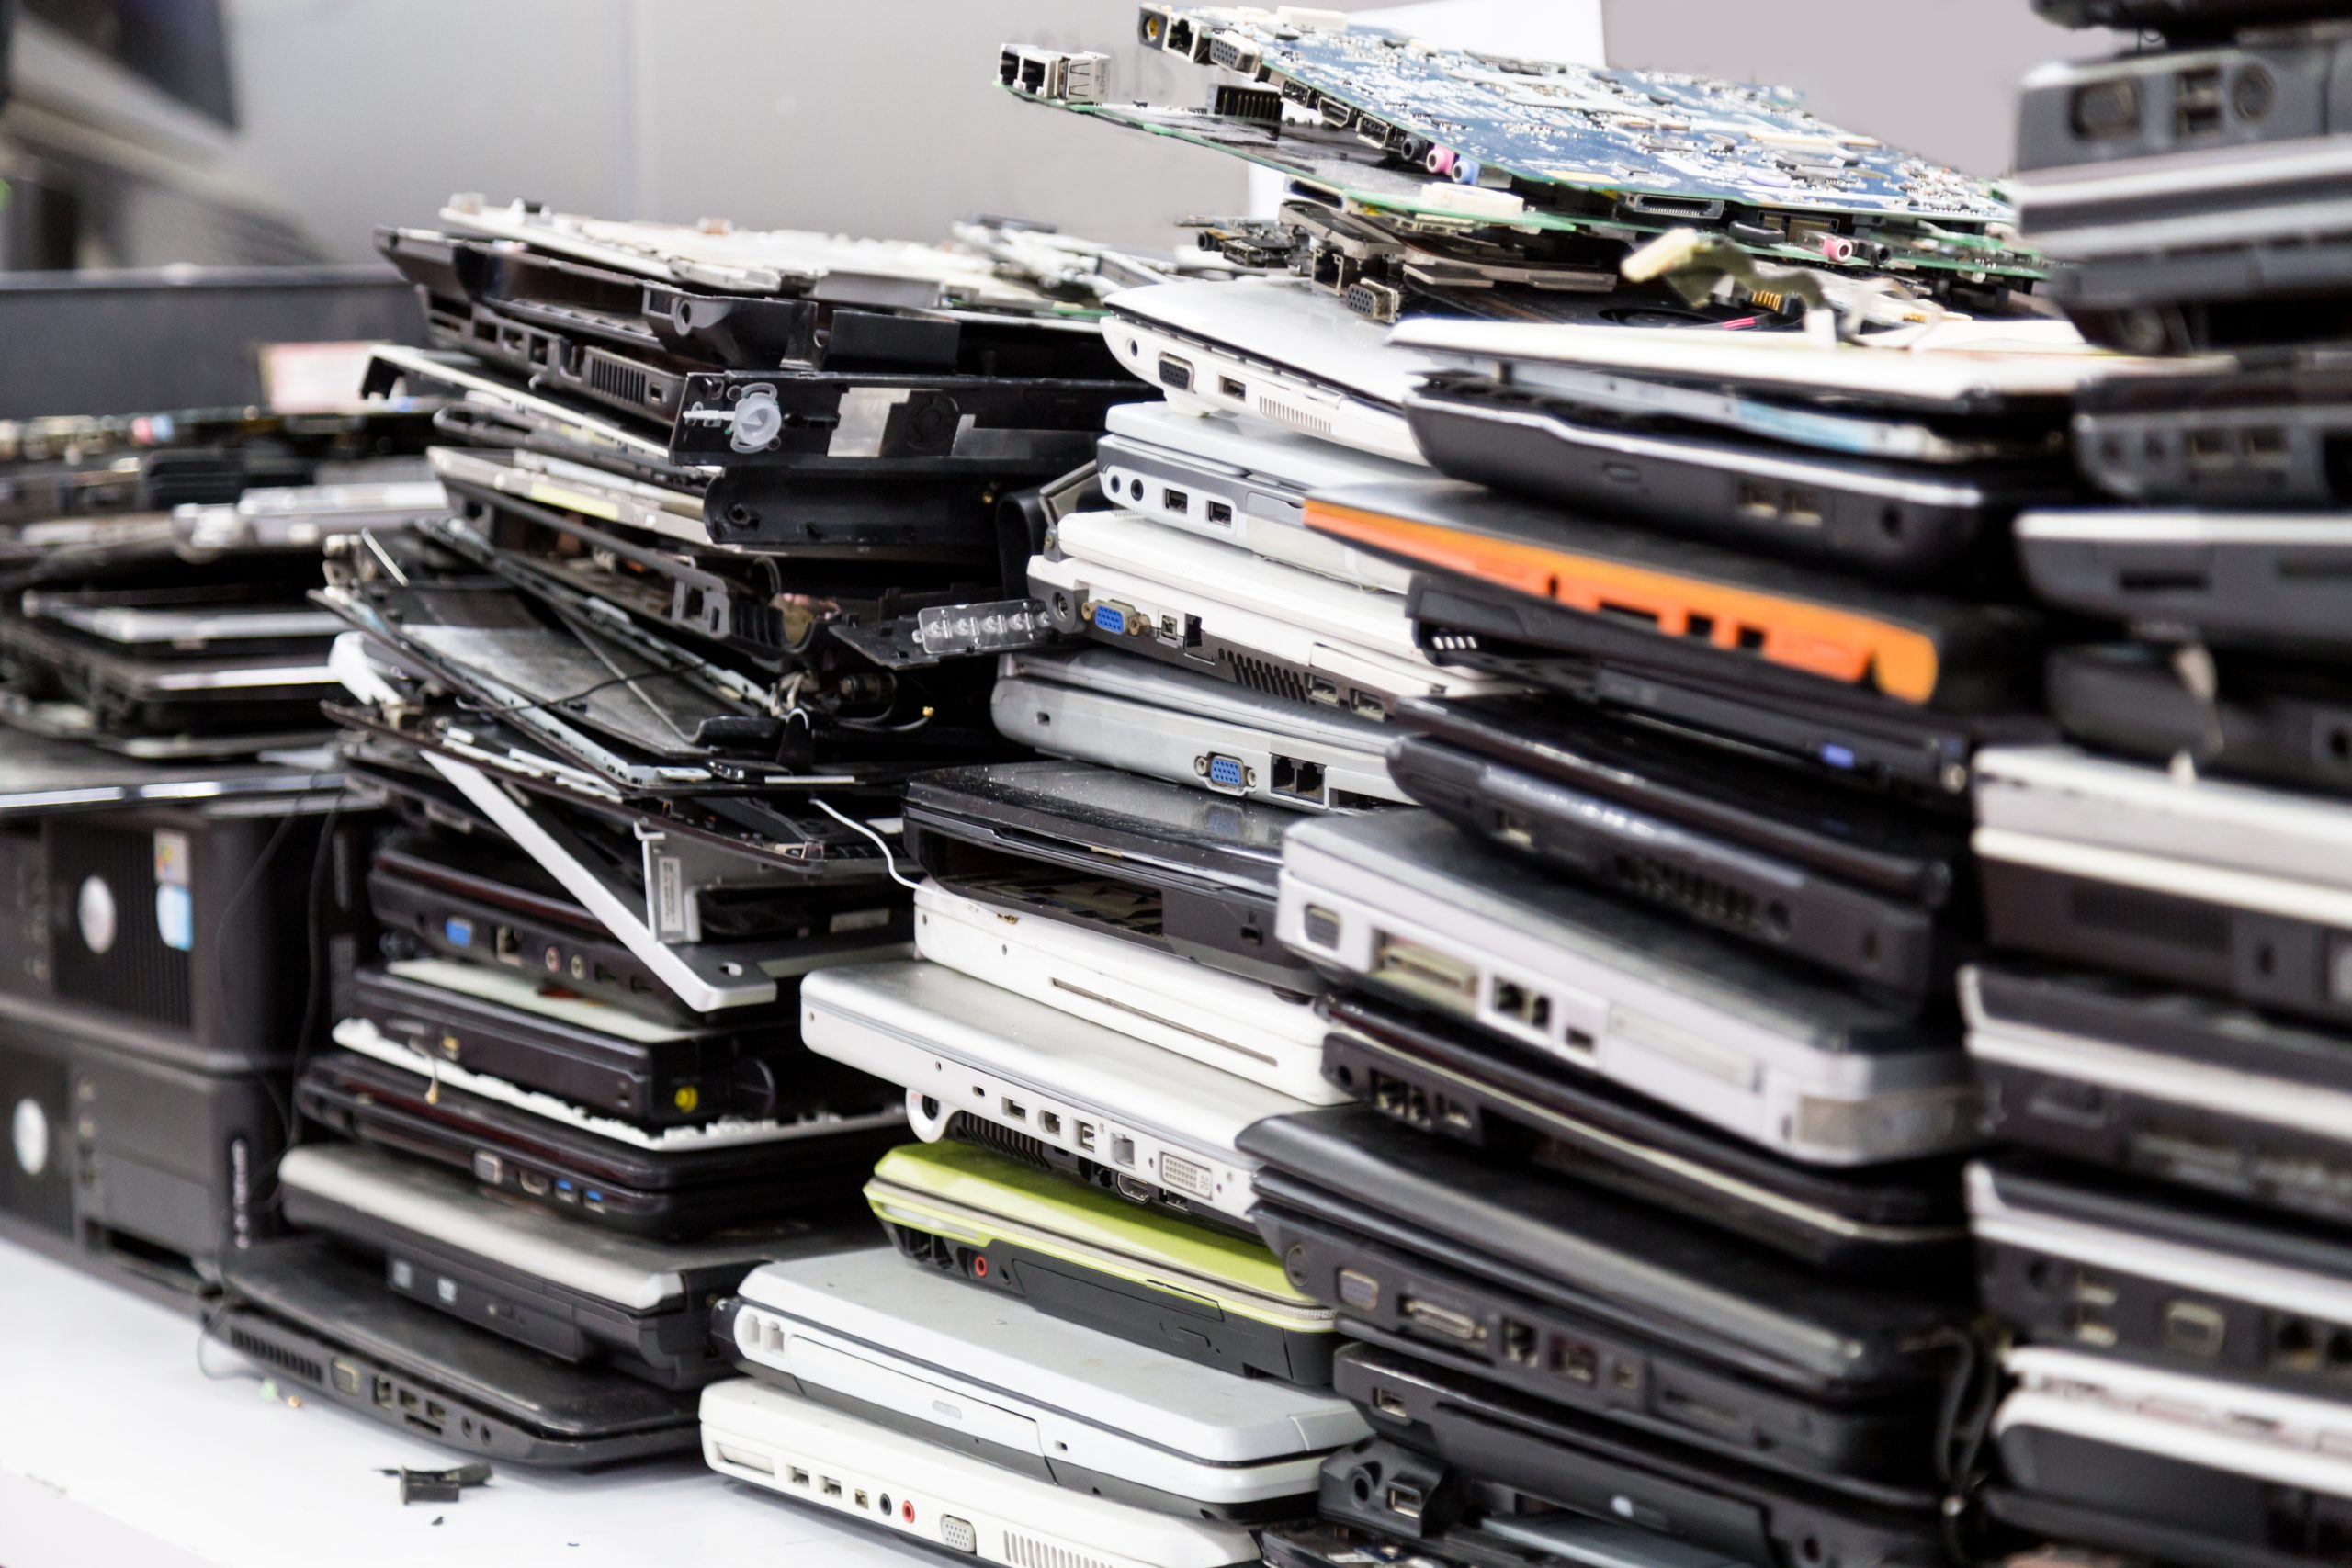 stacks of laptops - IT e-waste